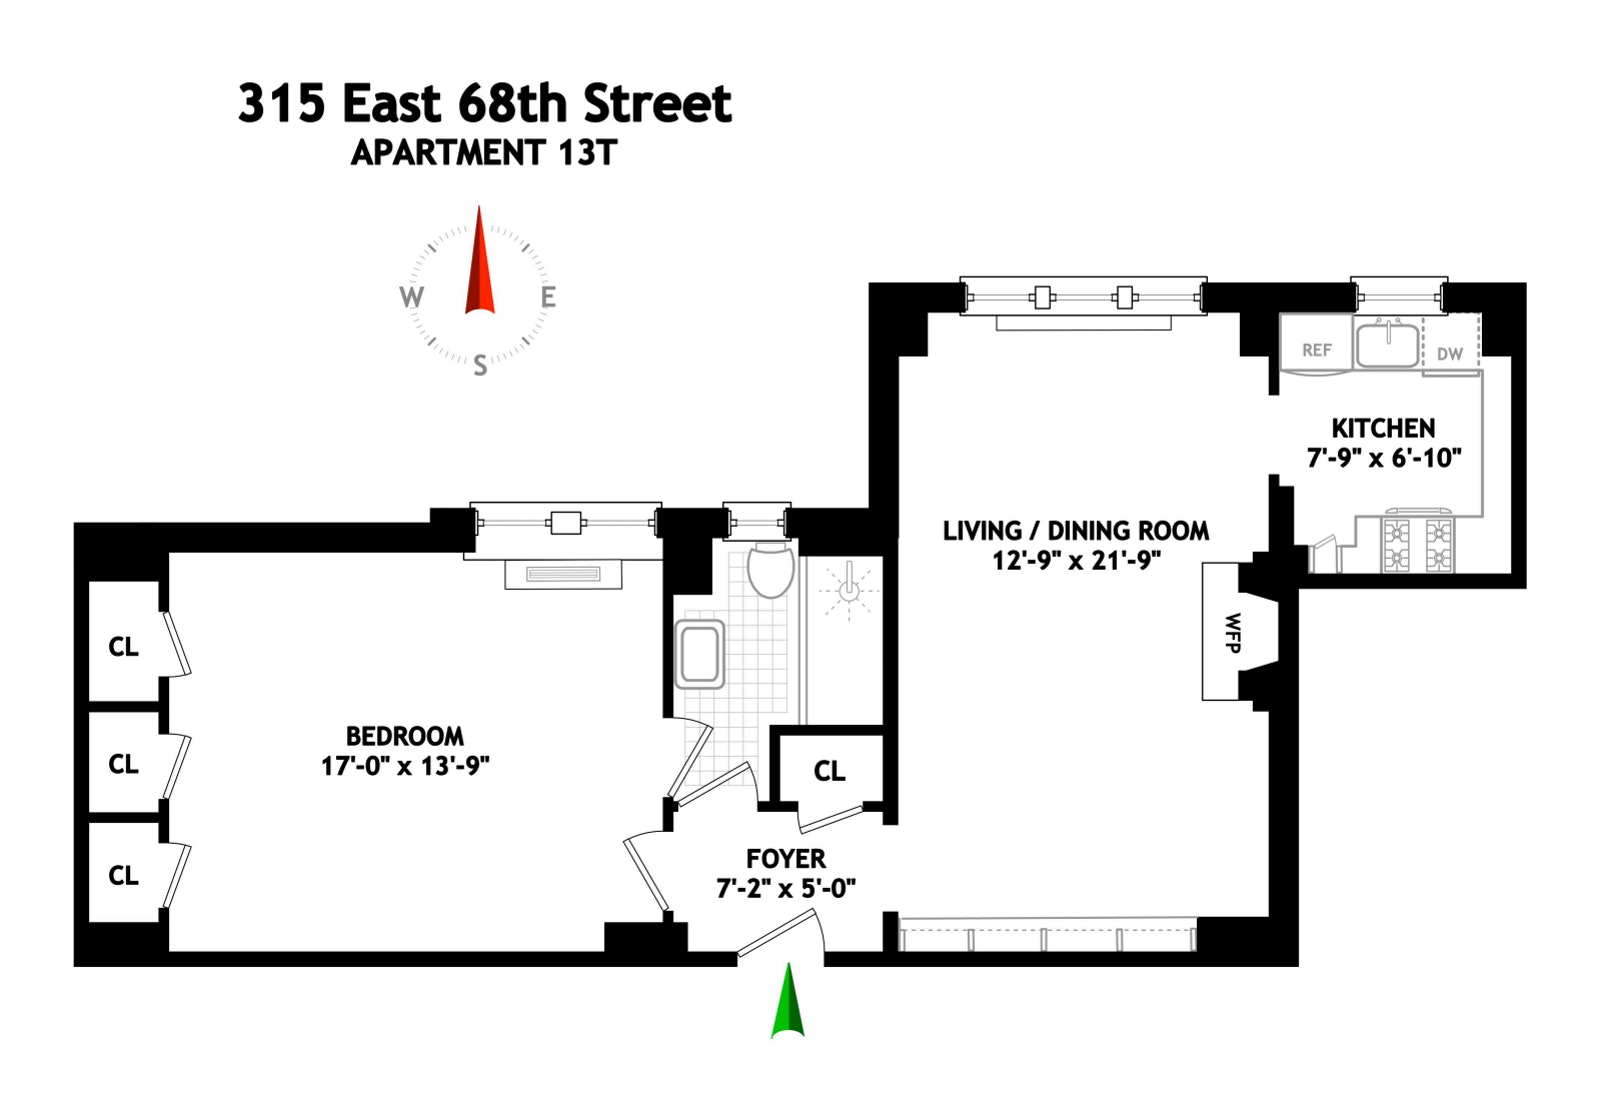 Floorplan for 315 East 68th Street, 13T